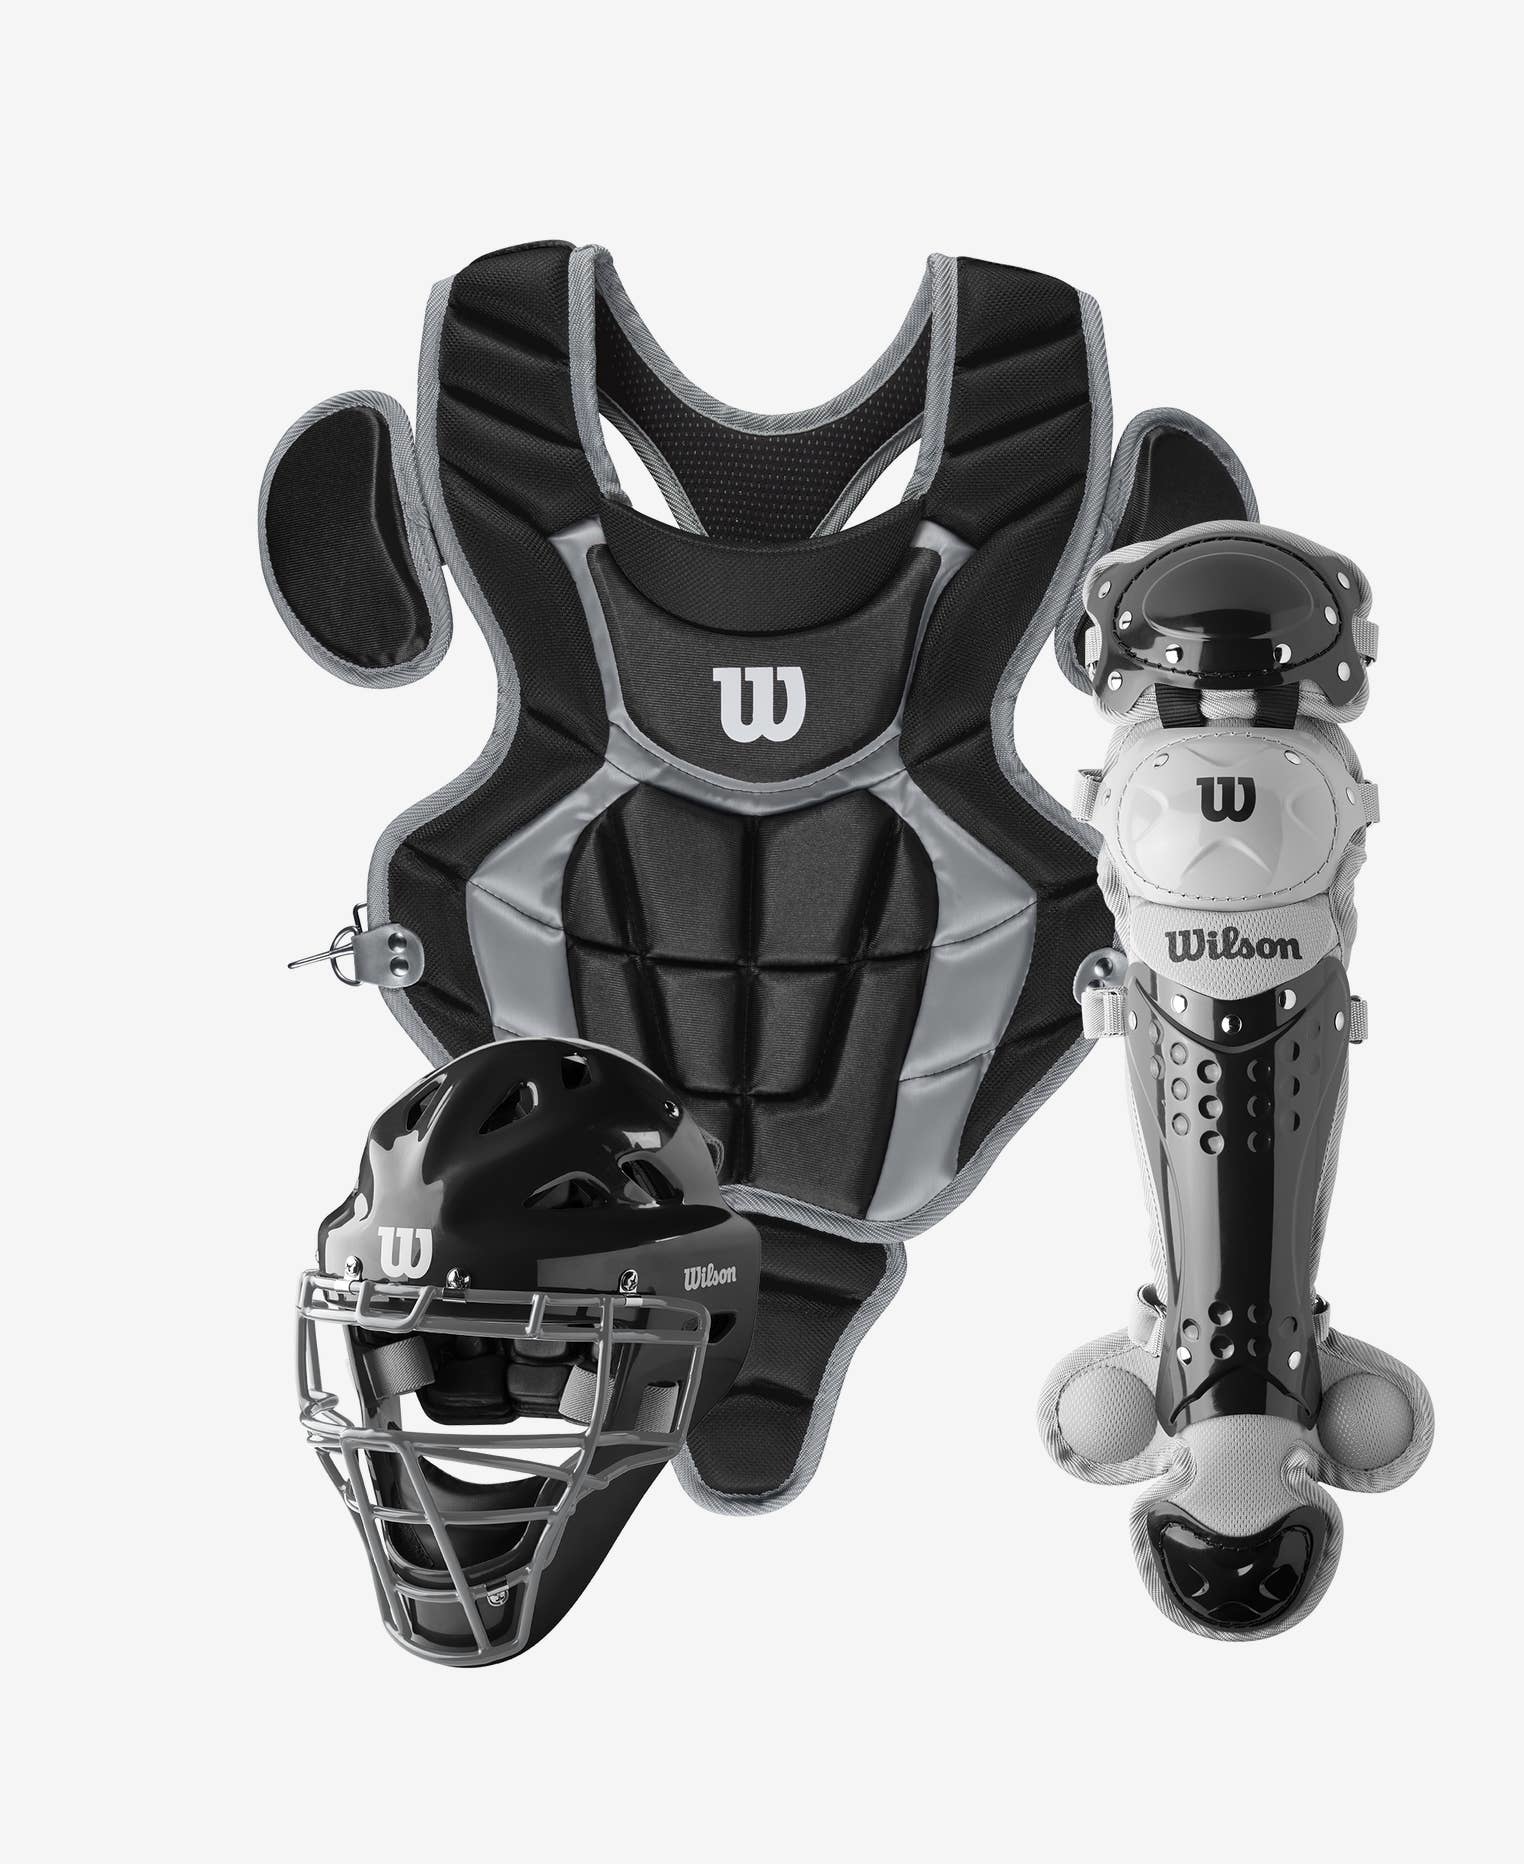 Wilson C200 catchers gear kit youth